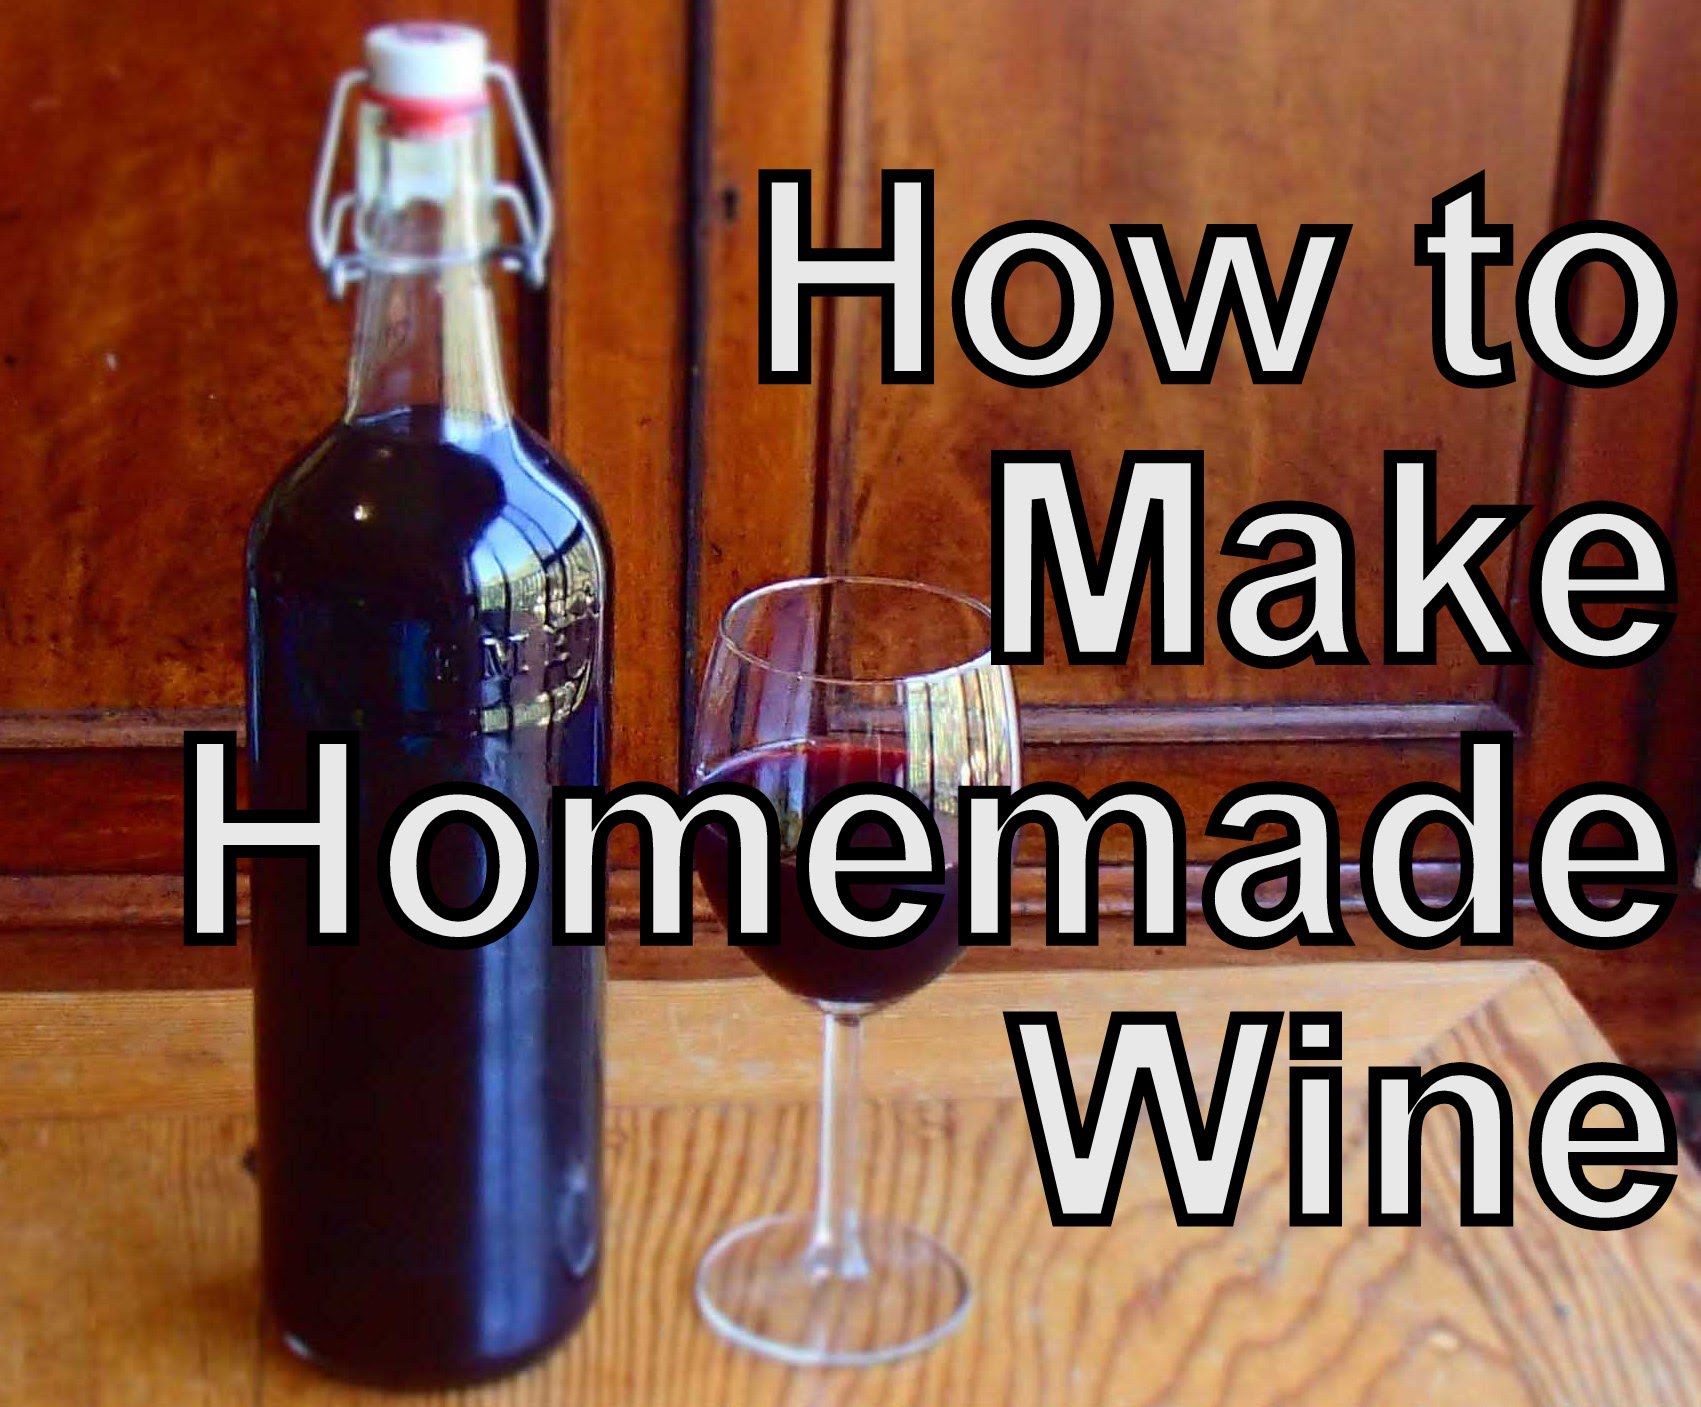 How To Make Make Wineâ¦